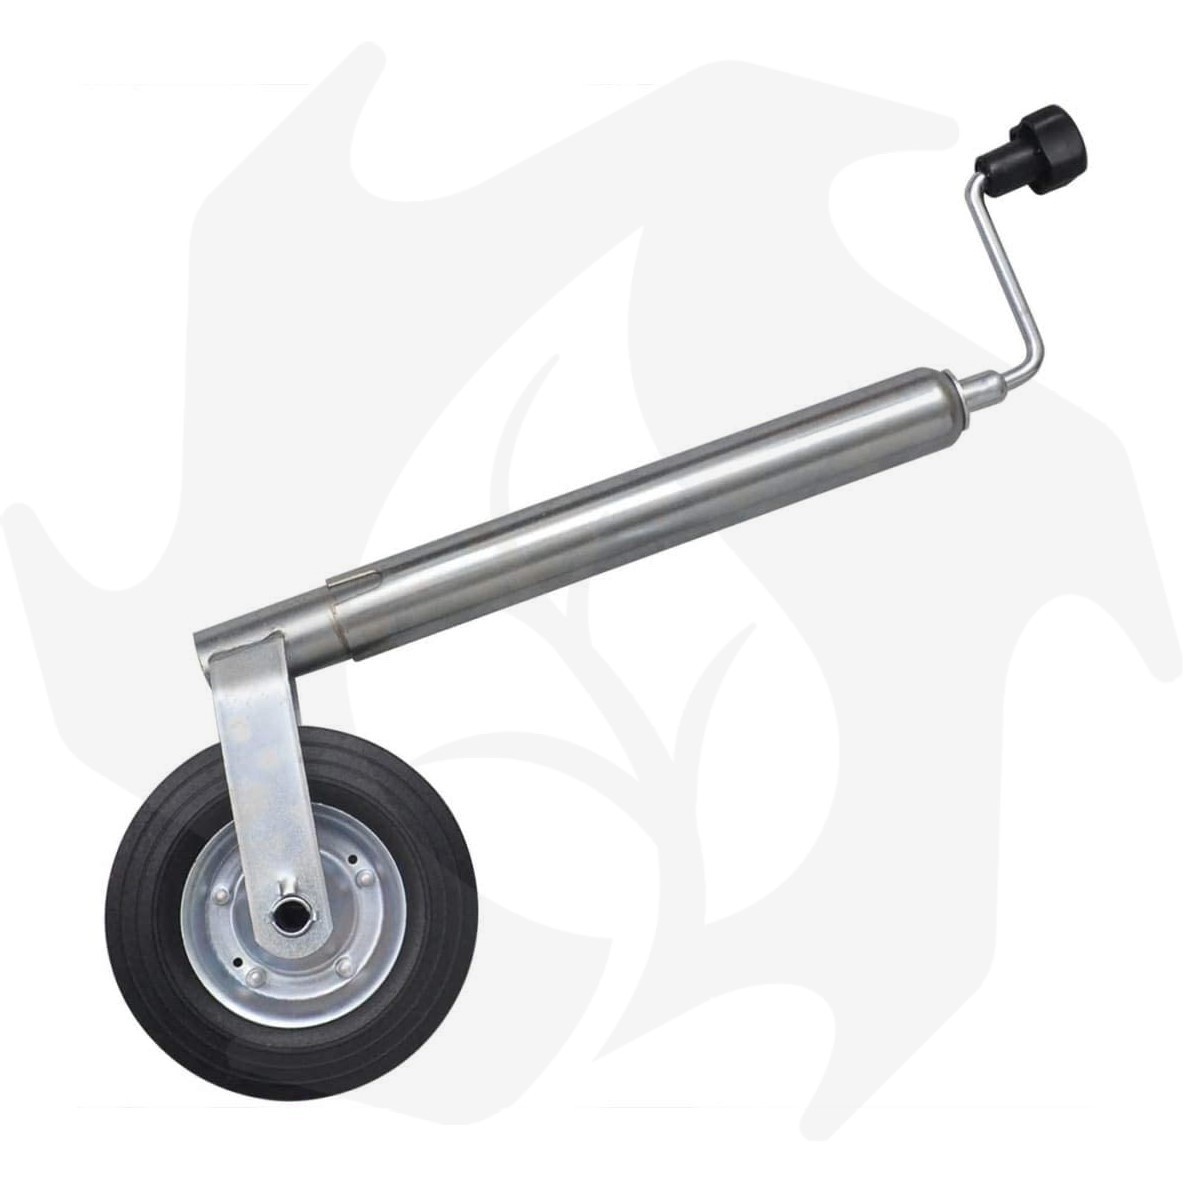 https://www.bazargiusto.it/264859/roue-de-levage-servo-timon-pour-suspension-de-chariot-de-remorque-tube-de-48-mm.jpg